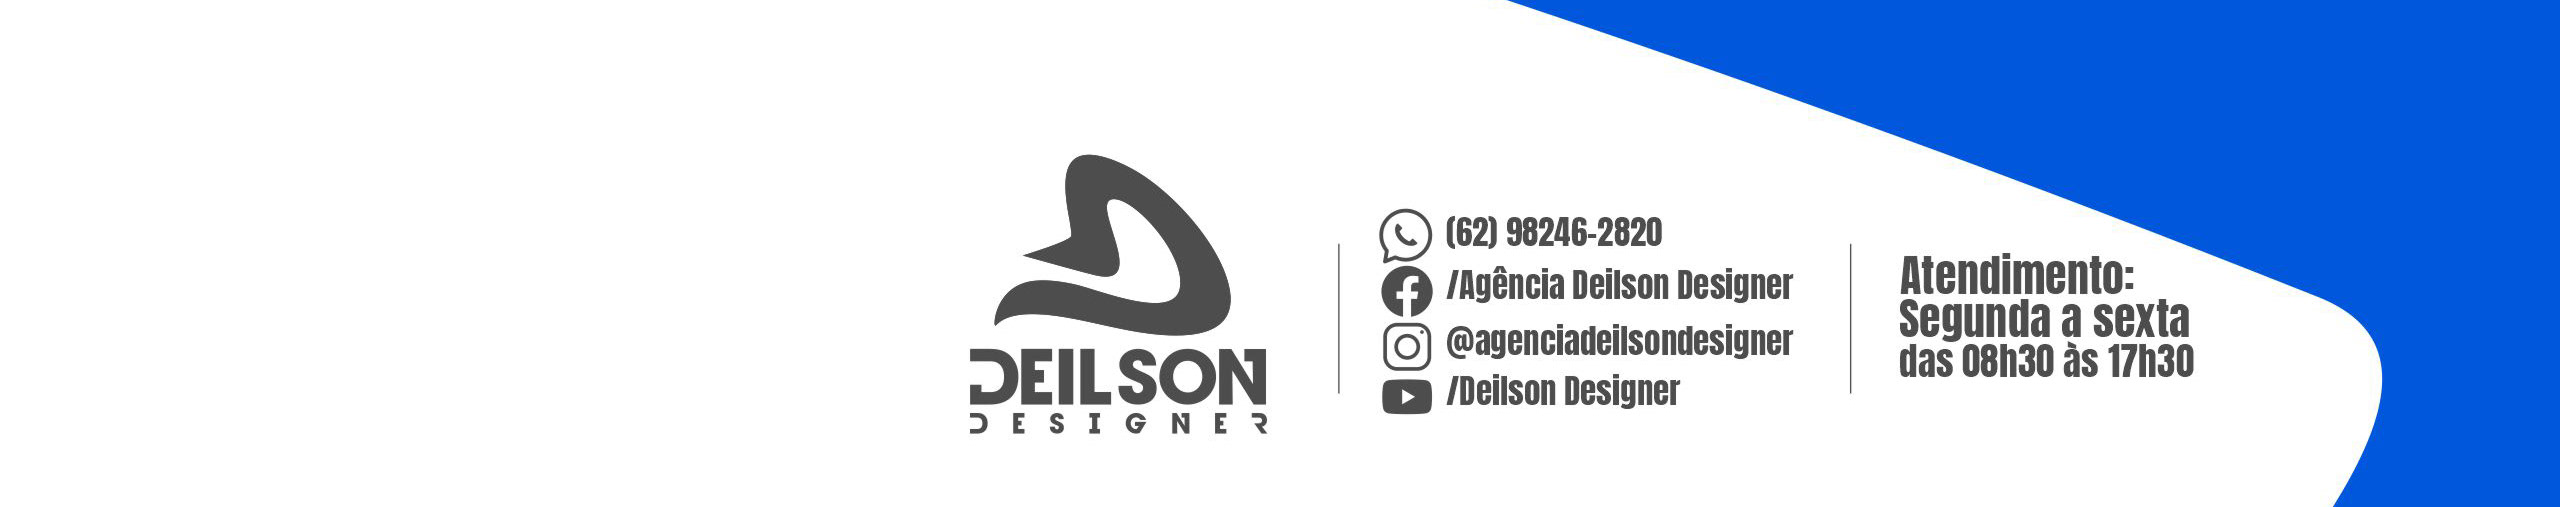 Deilson Designer's profile banner